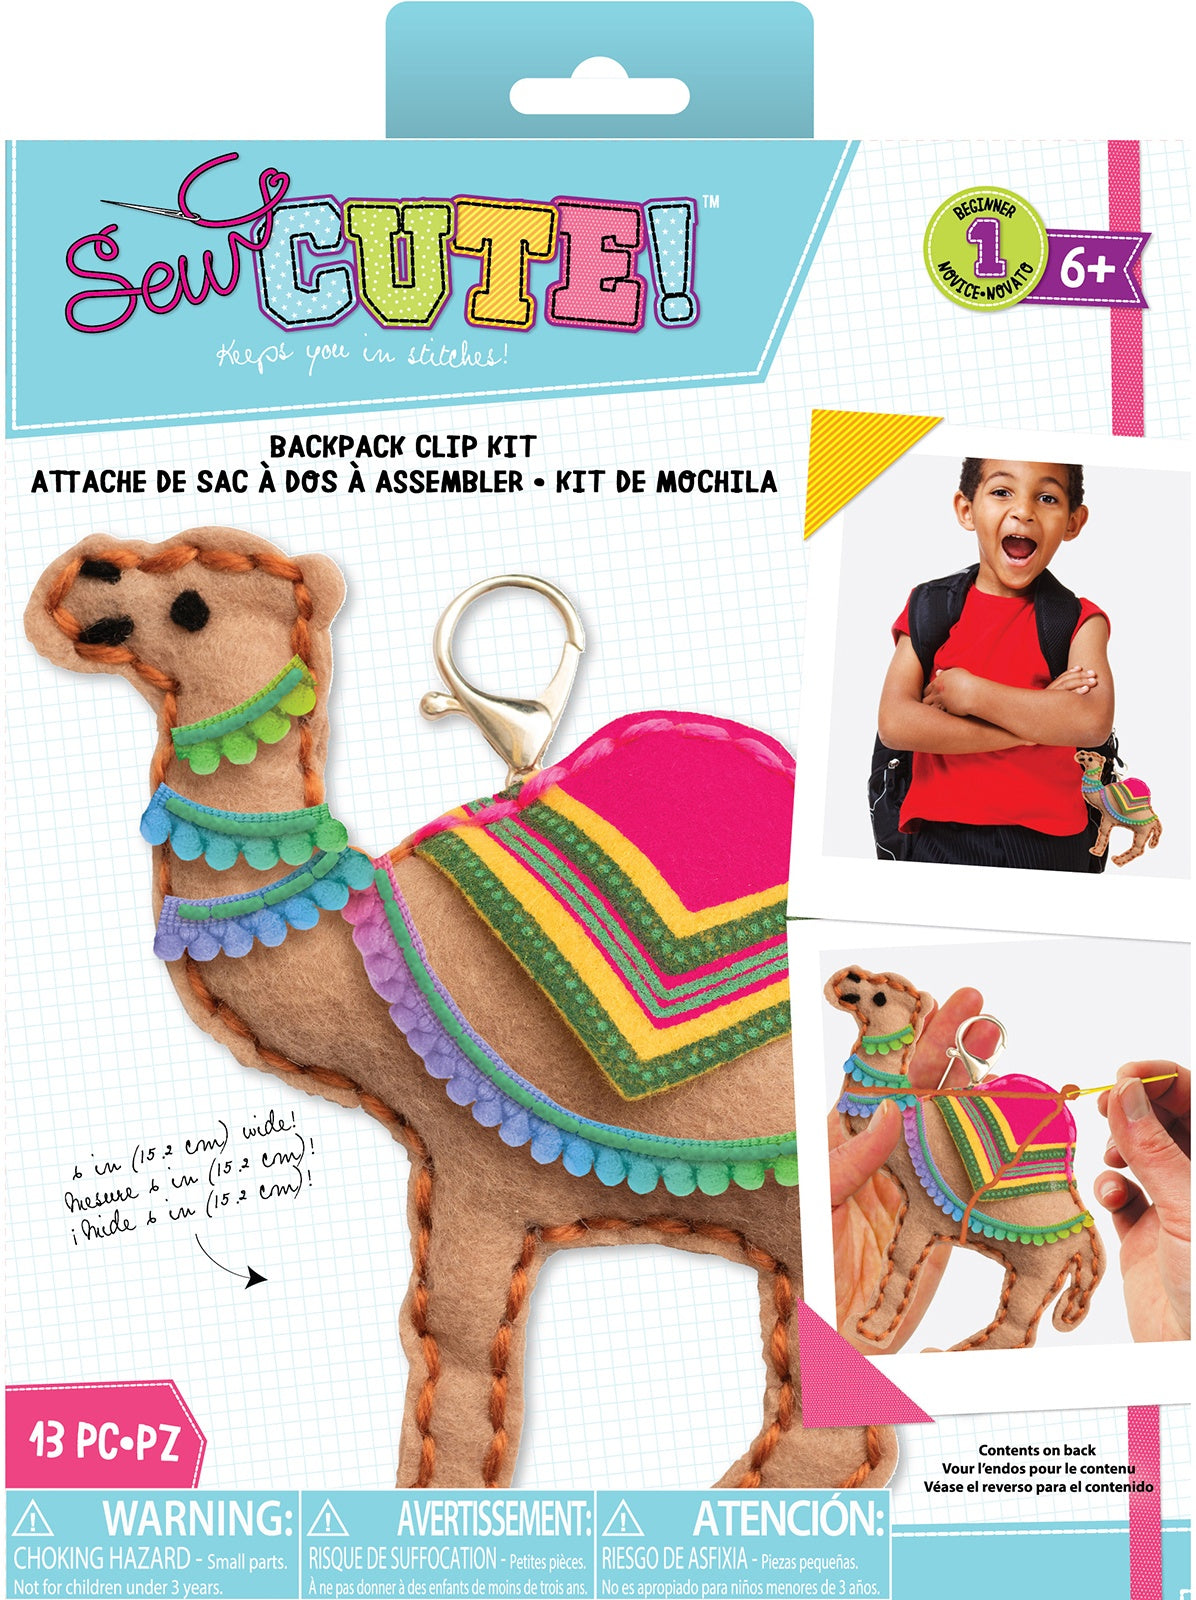 Sew cute felt kit for kids. Design features a camel.